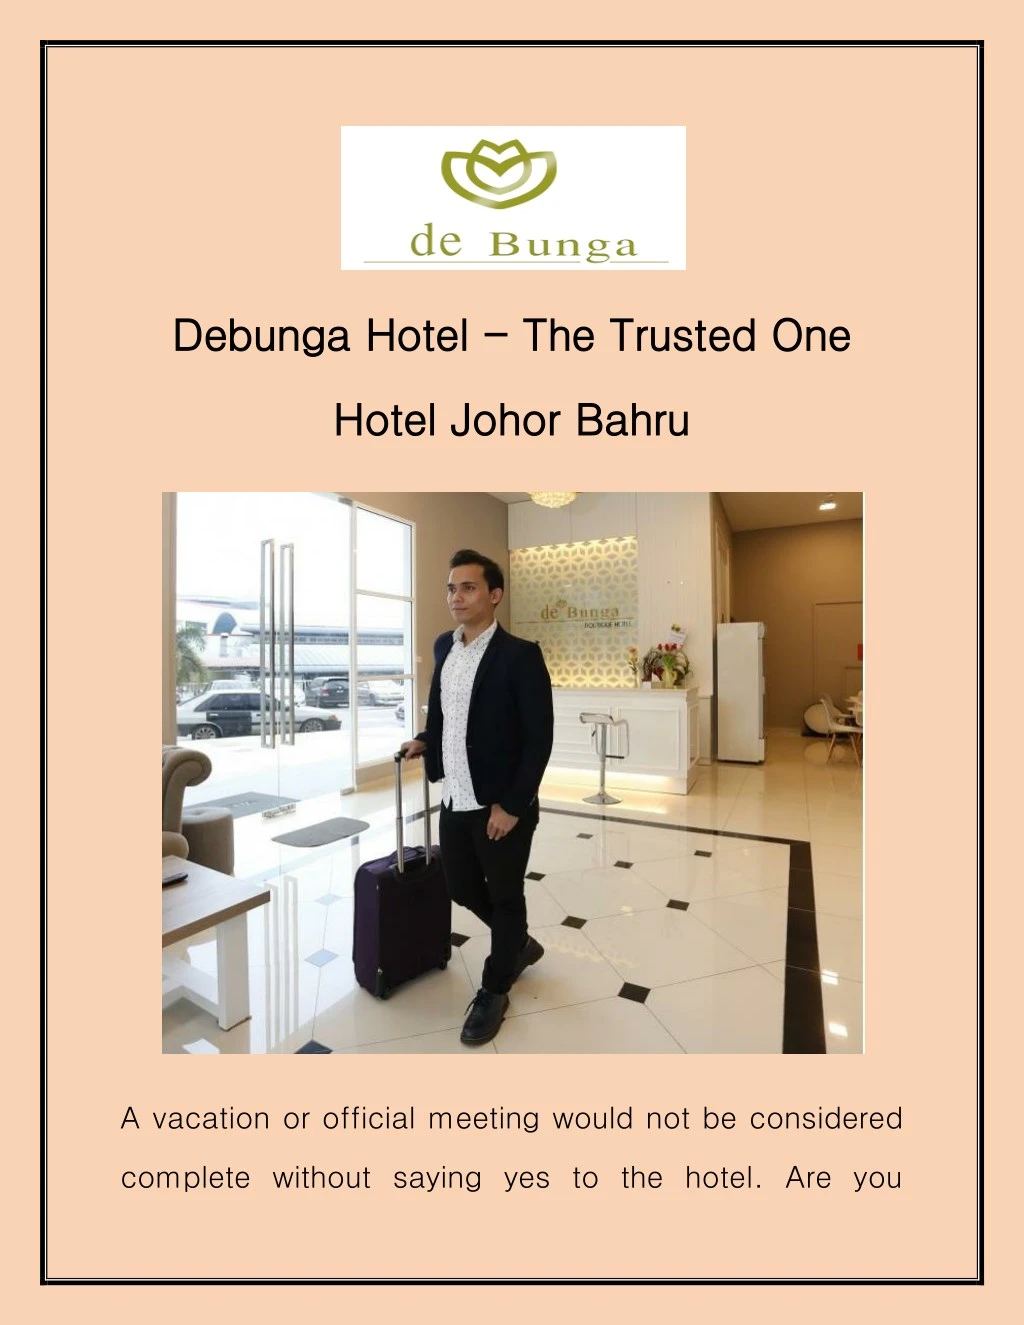 debunga hotel debunga hotel the trusted one